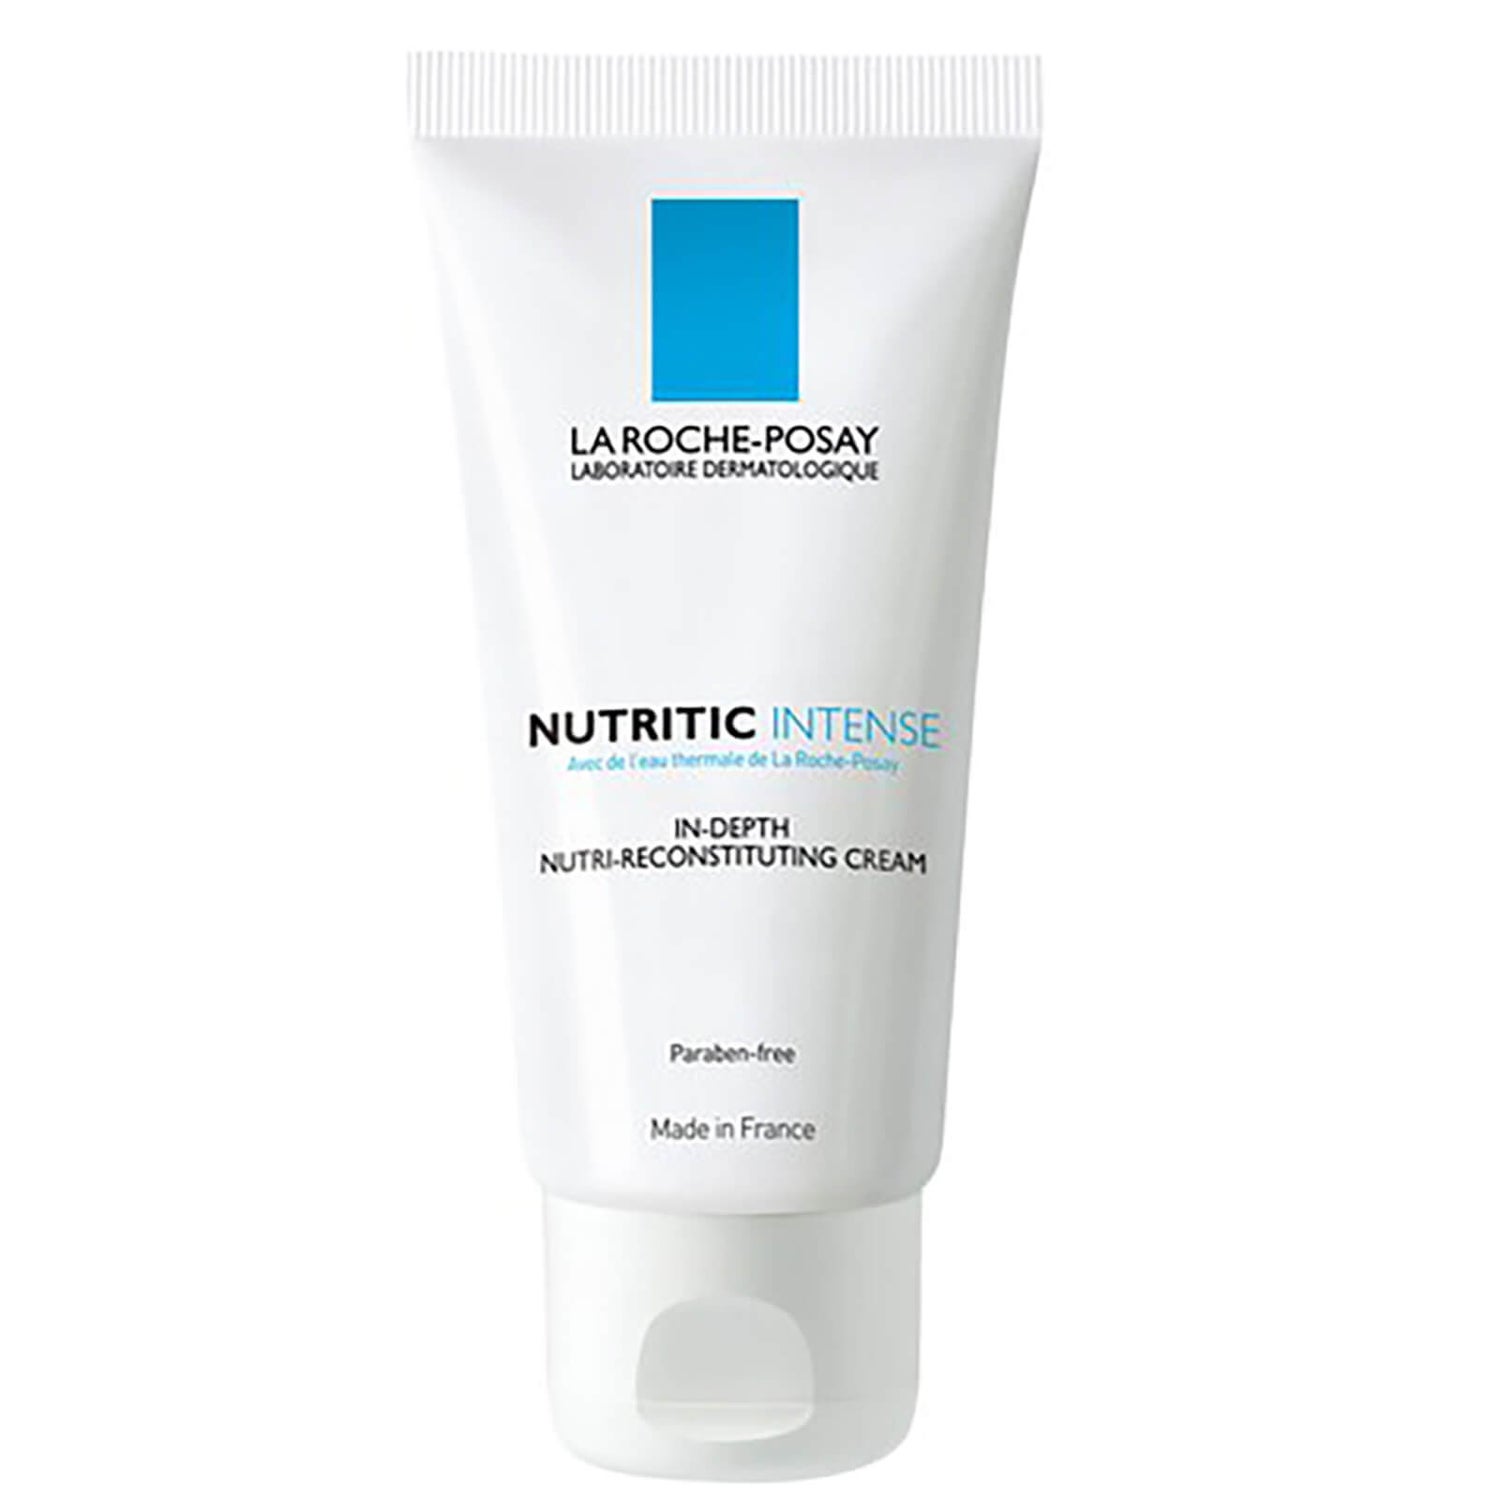 La Roche-Posay Nutritic Intense for Dry Skin 50ml